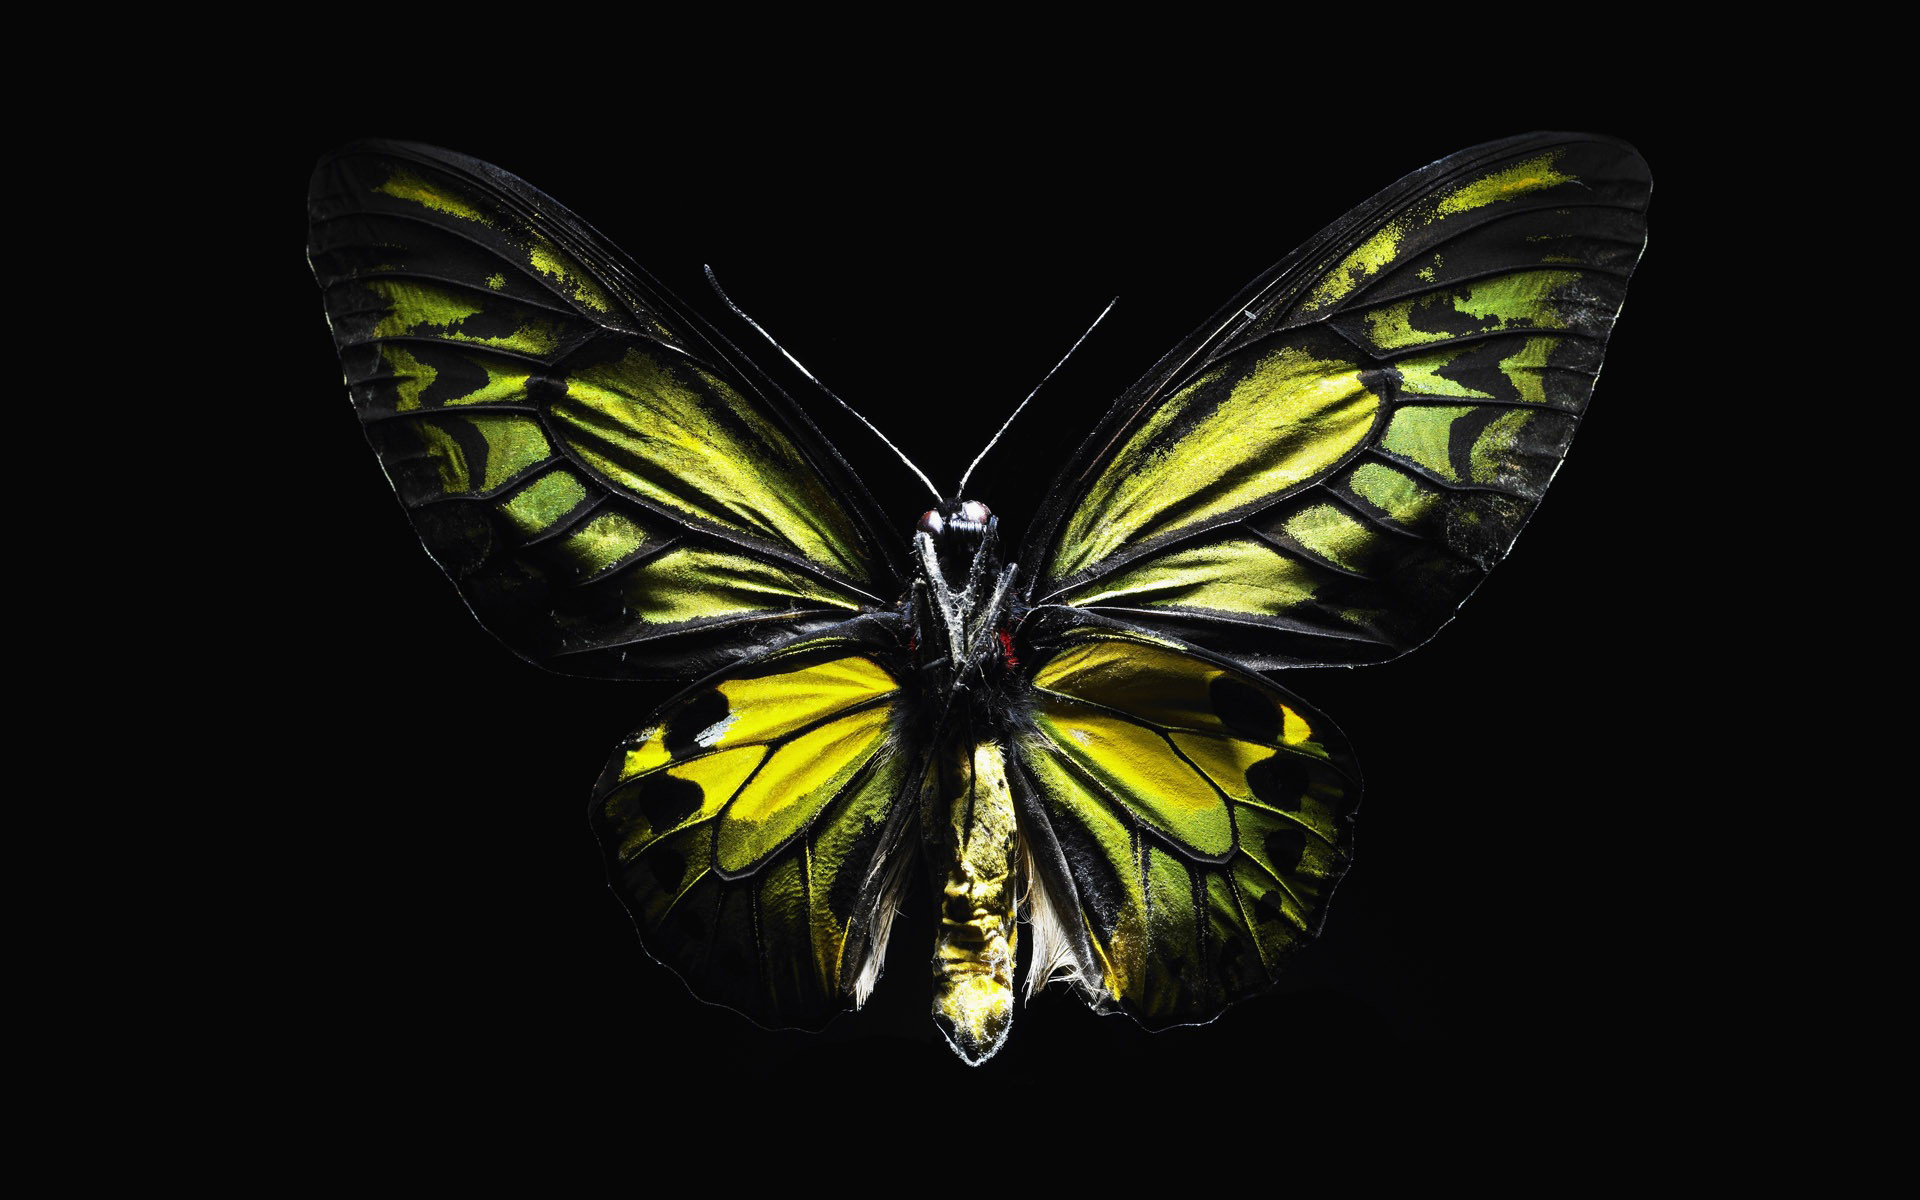 1920x1200 Download wallpaper: gree butterfly, green butterfly on .